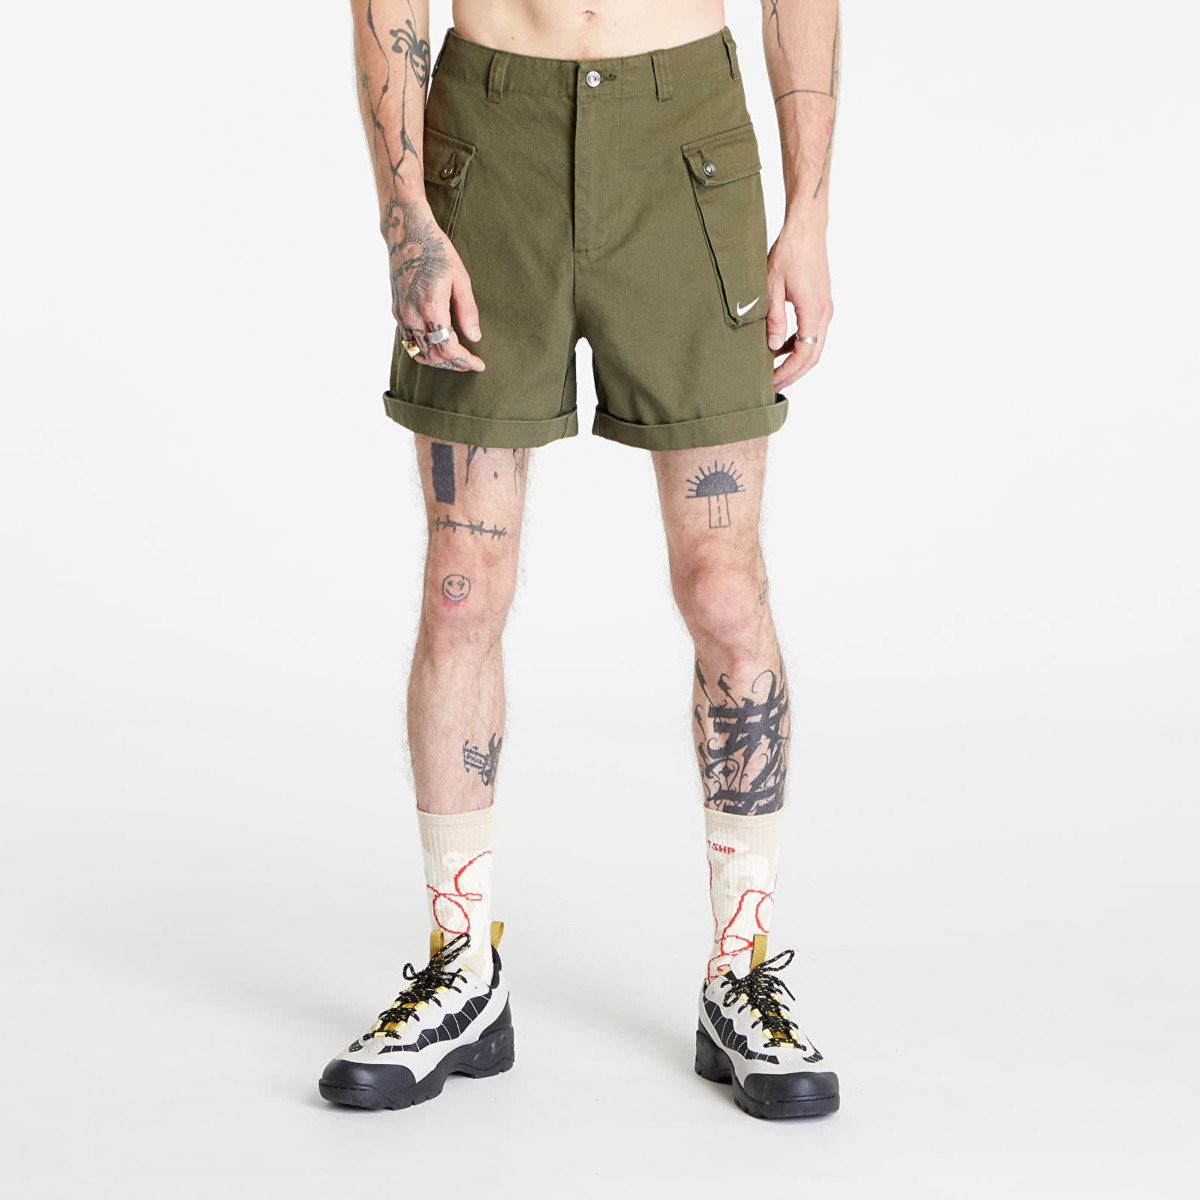 Shorts in Khaki - Nike Man - Footshop GOOFASH